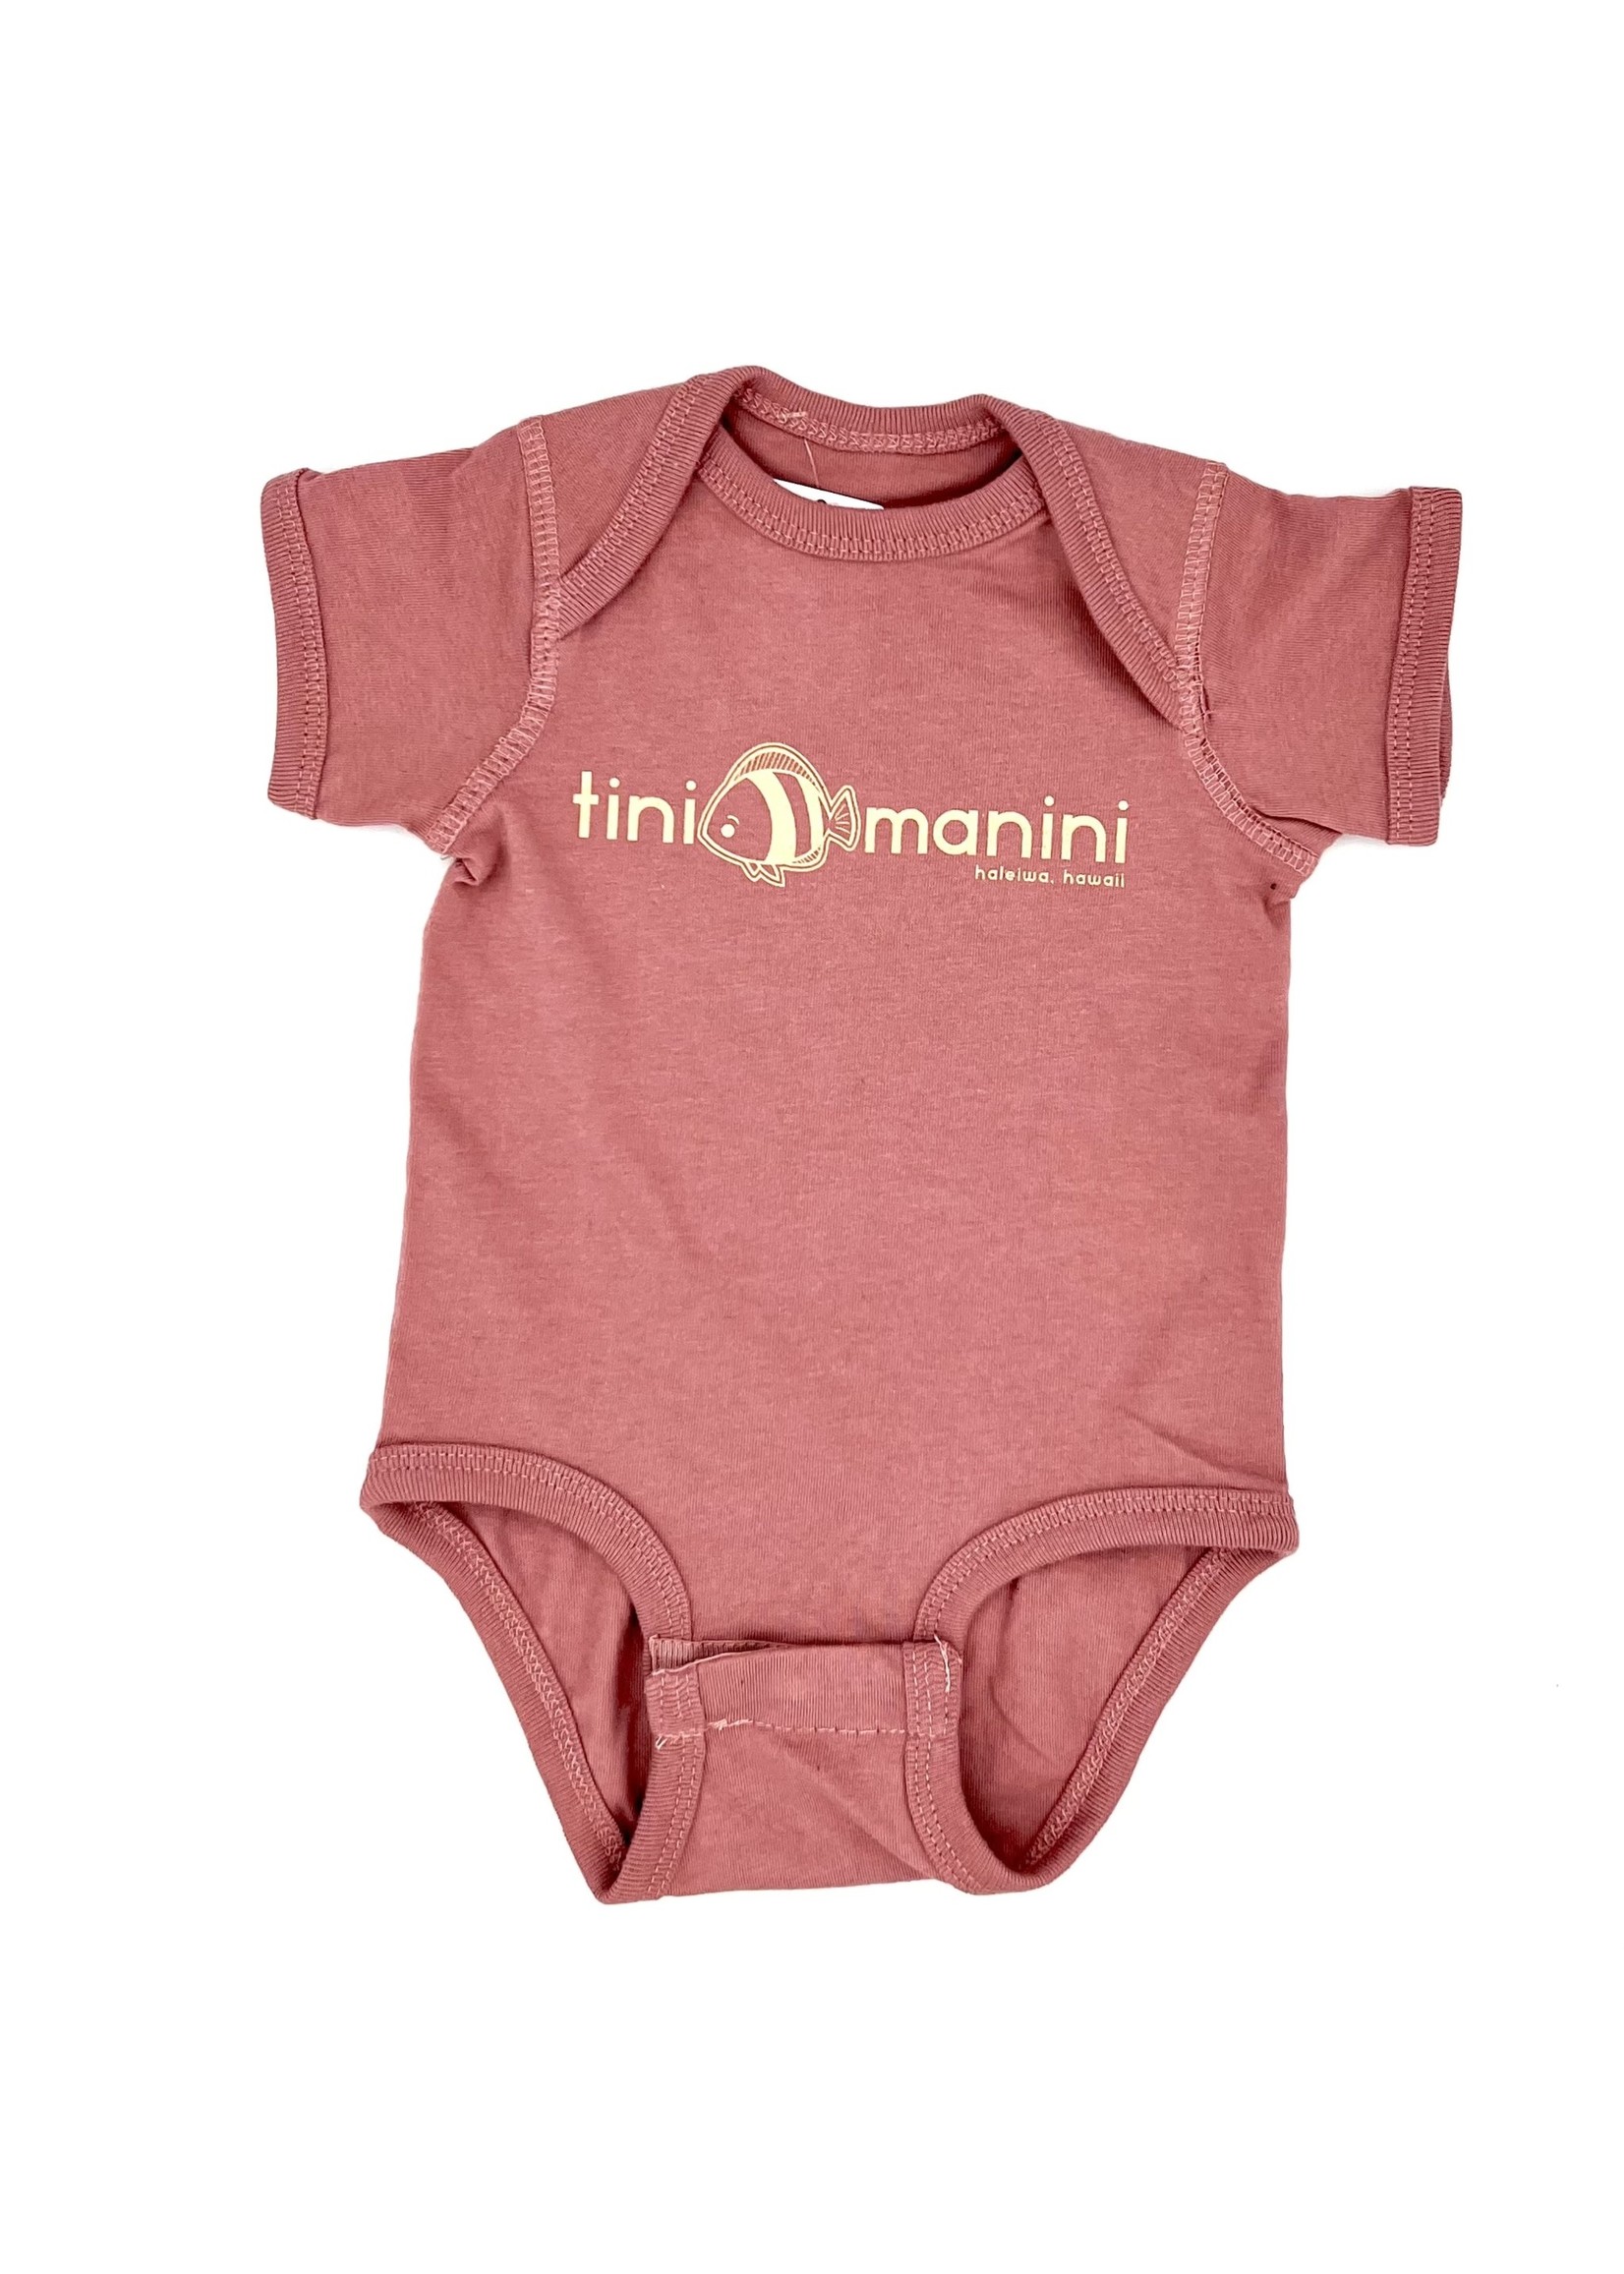 Tini Manini line logo - onesie